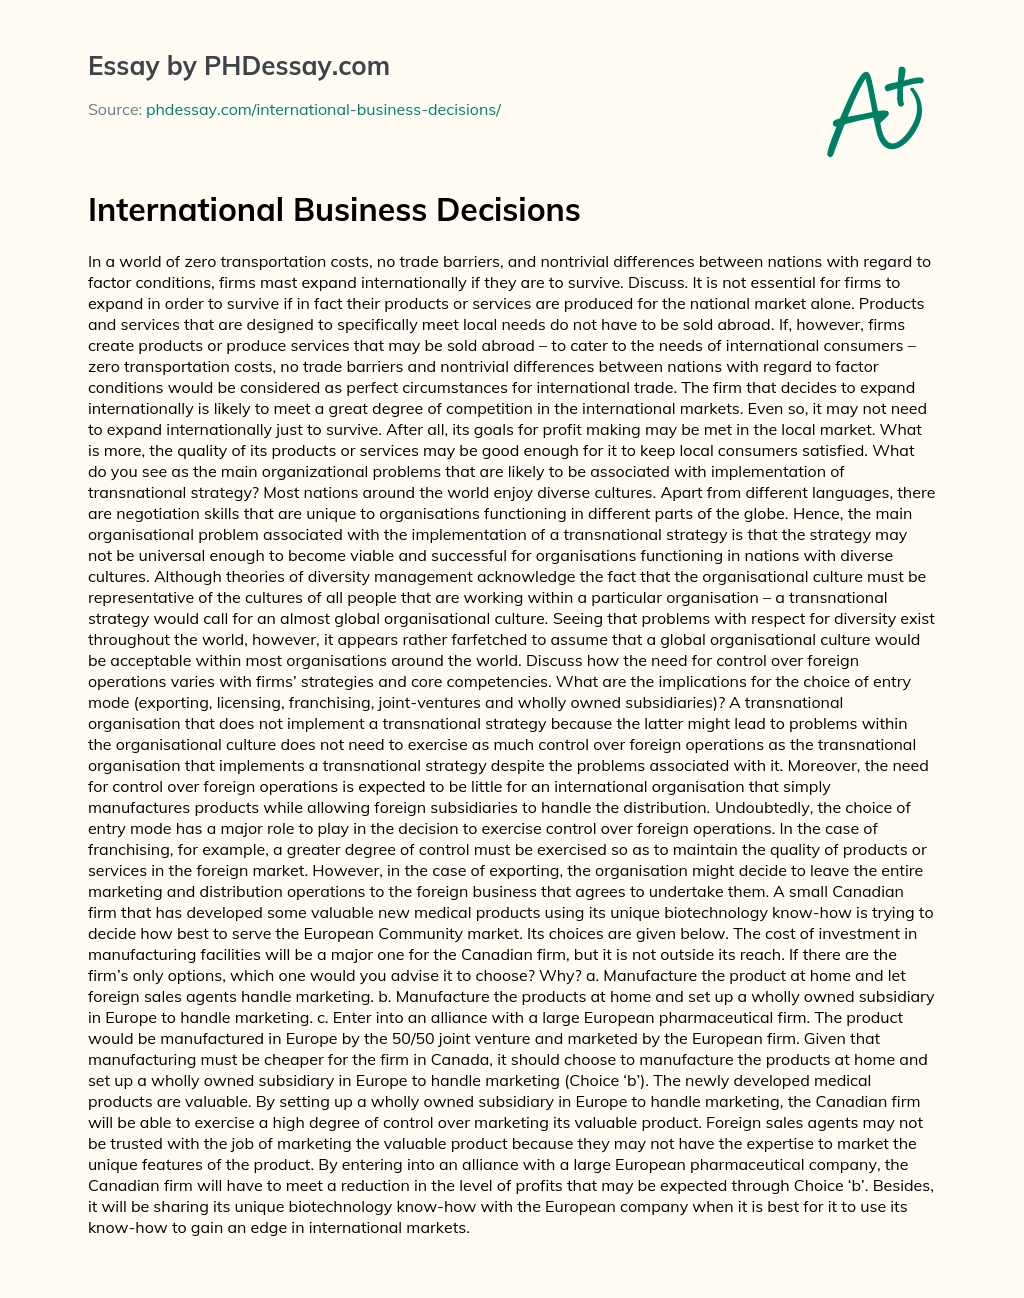 International Business Decisions essay